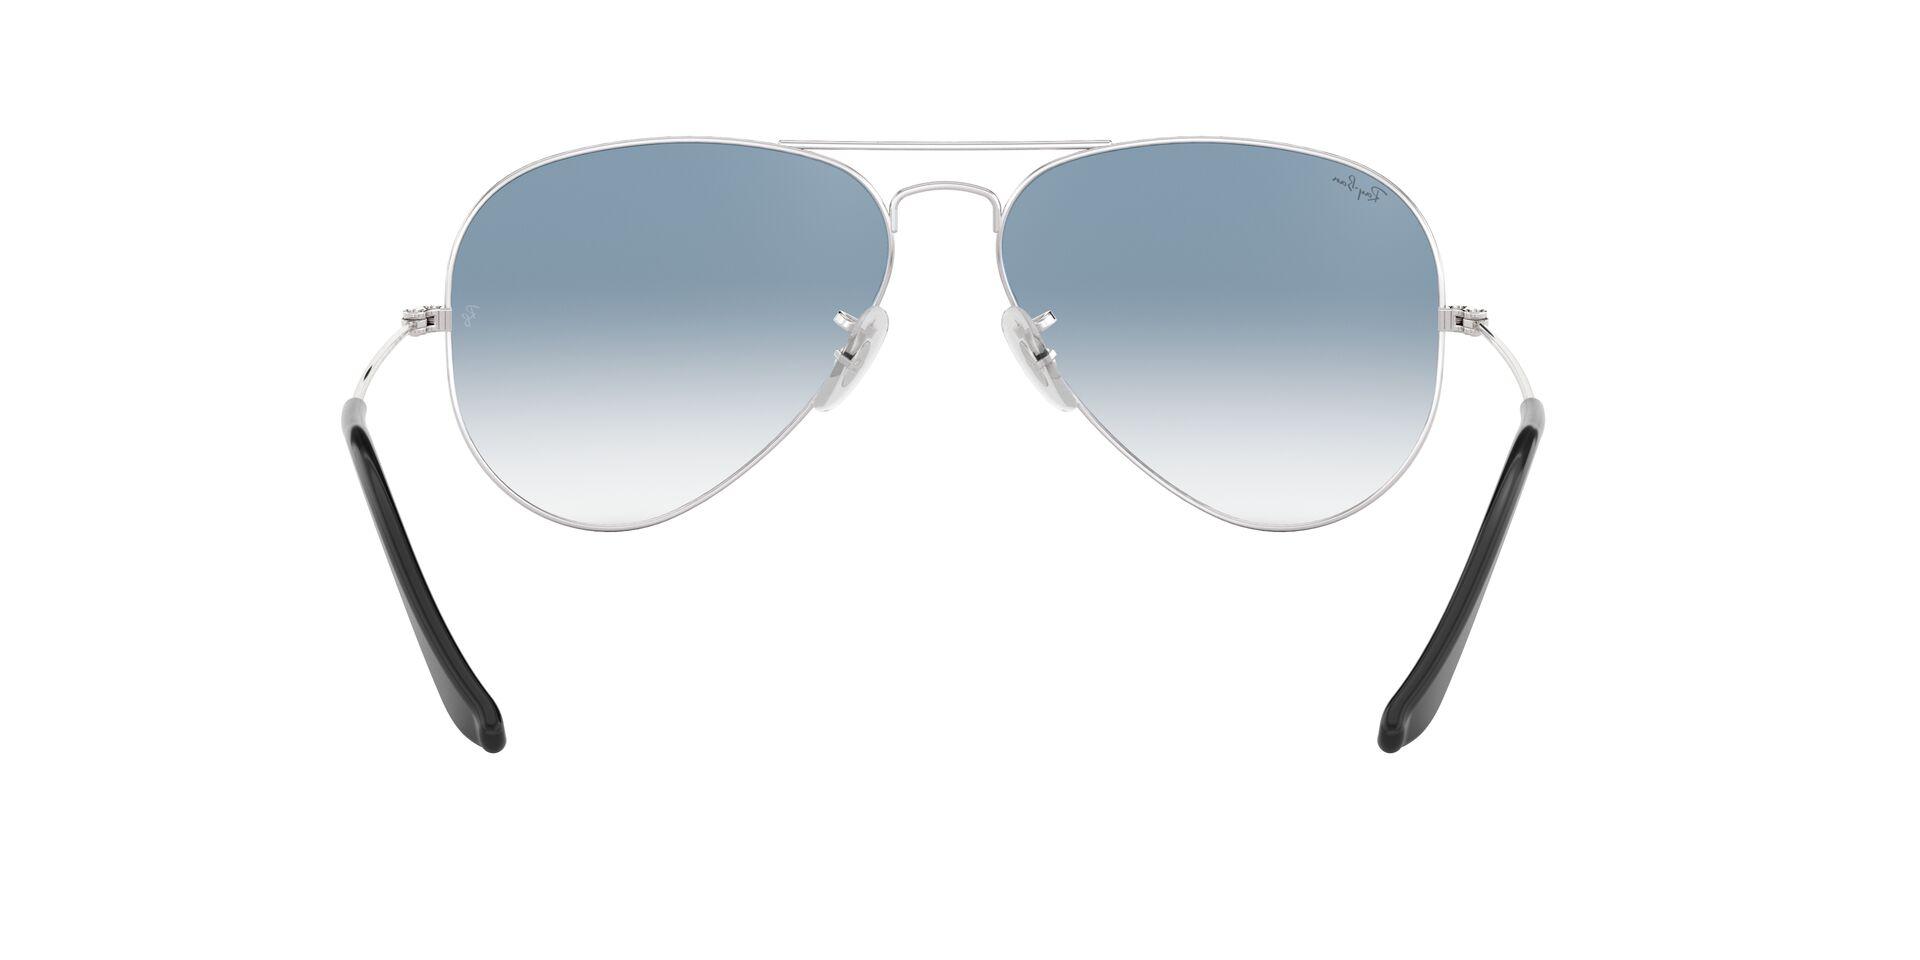 Mắt Kính RAY-BAN AVIATOR LARGE METAL - RB3025 003/3F -Sunglasses